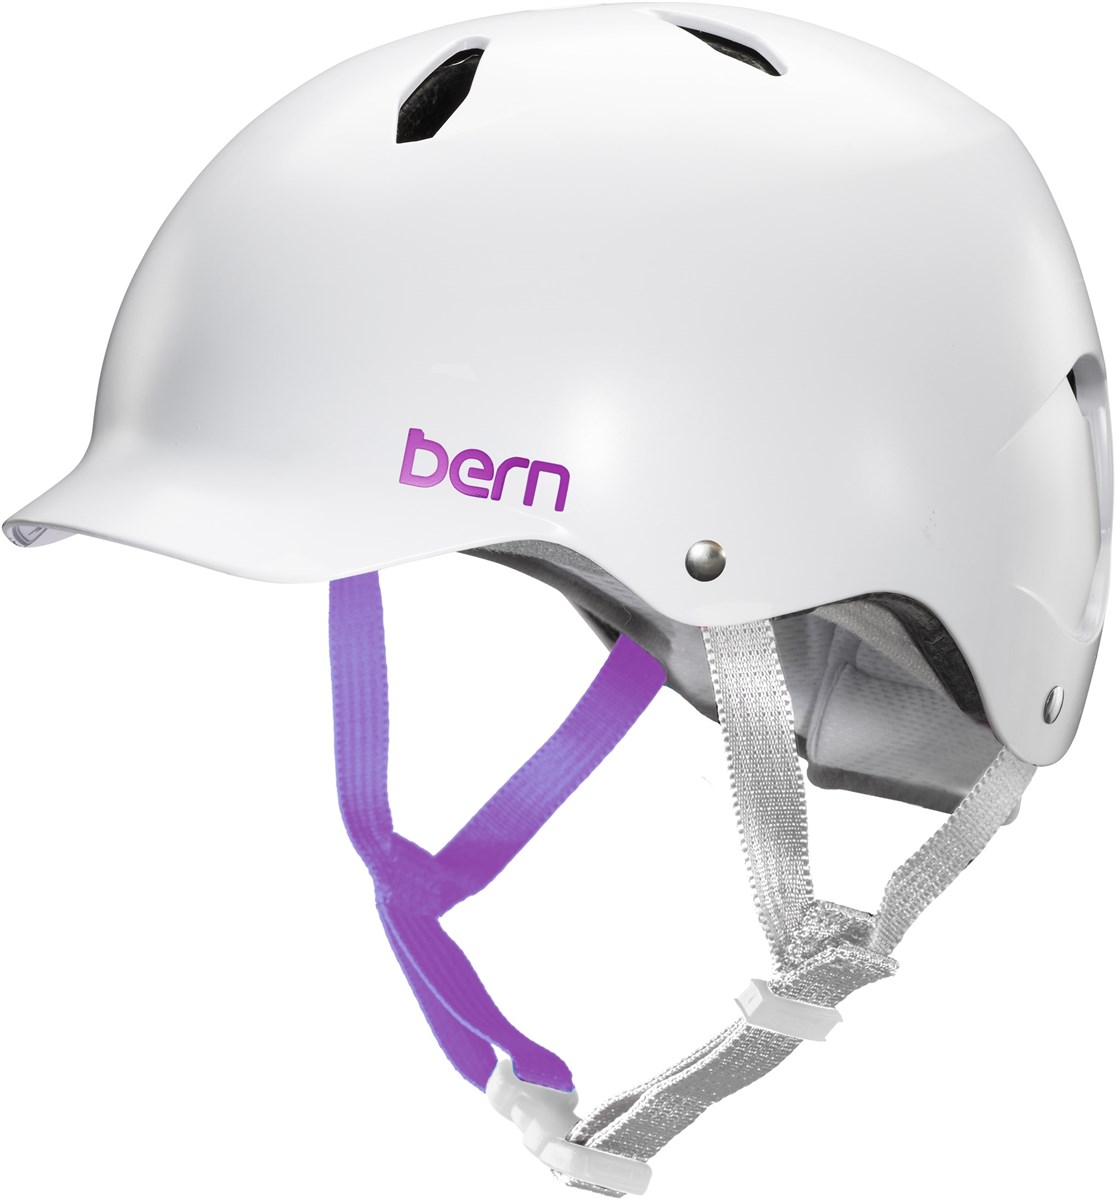 Bern Bandita EPS Thin Shell Kids / Junior Cycling Helmet 2015 product image